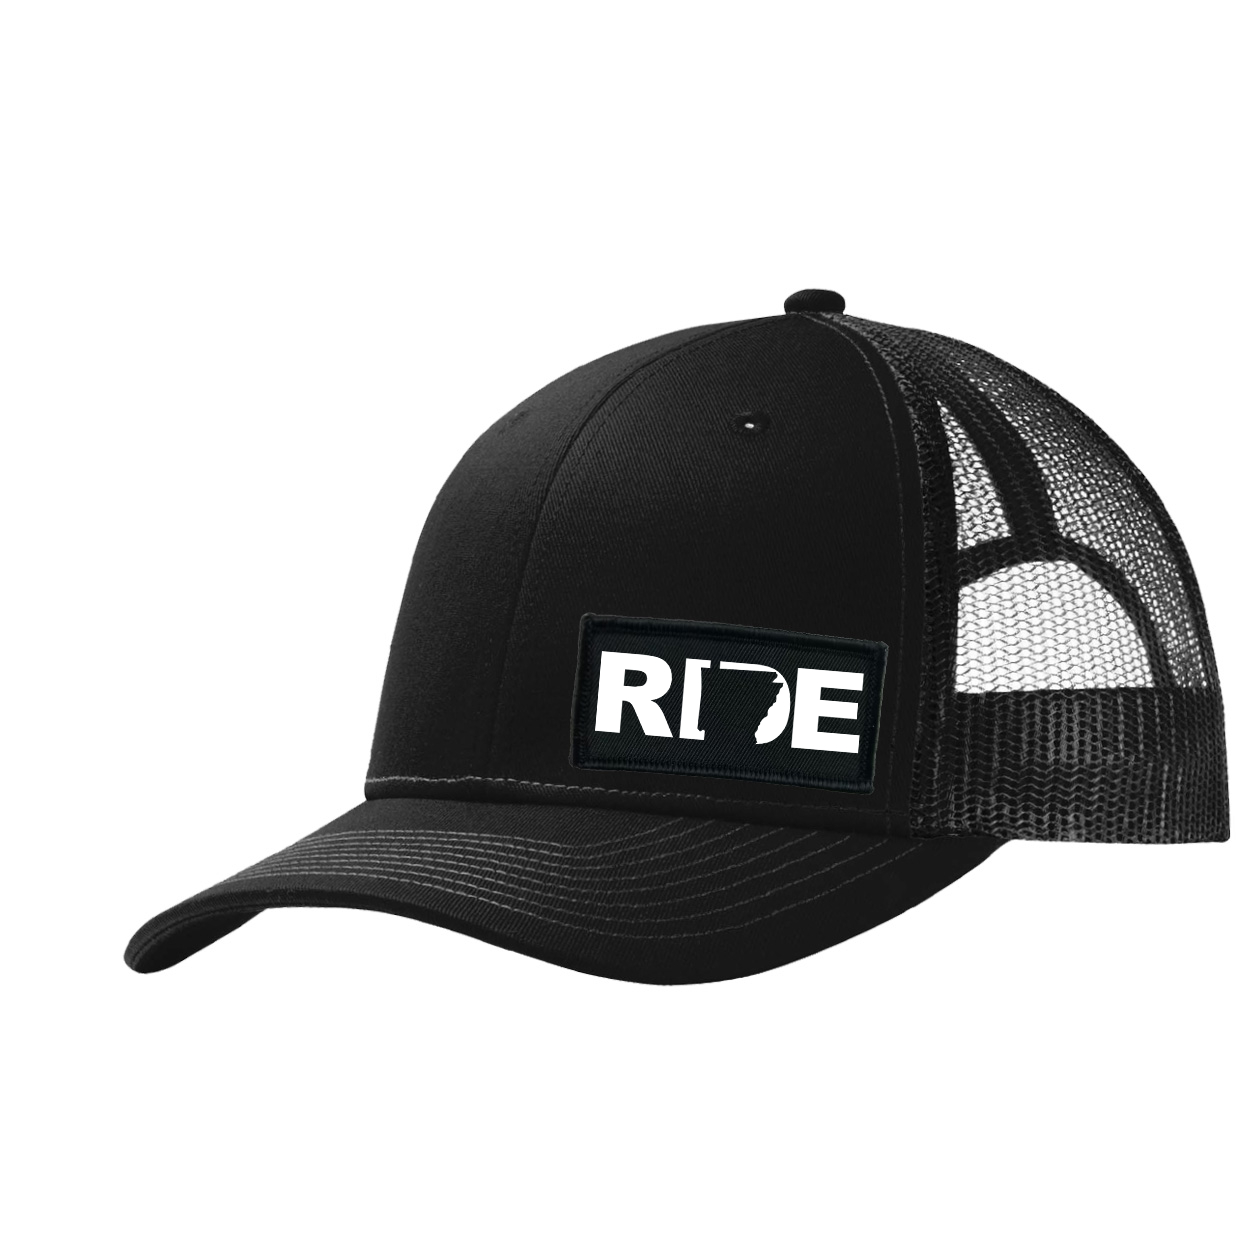 Ride Arkansas Night Out Woven Patch Snapback Trucker Hat Black (White Logo)